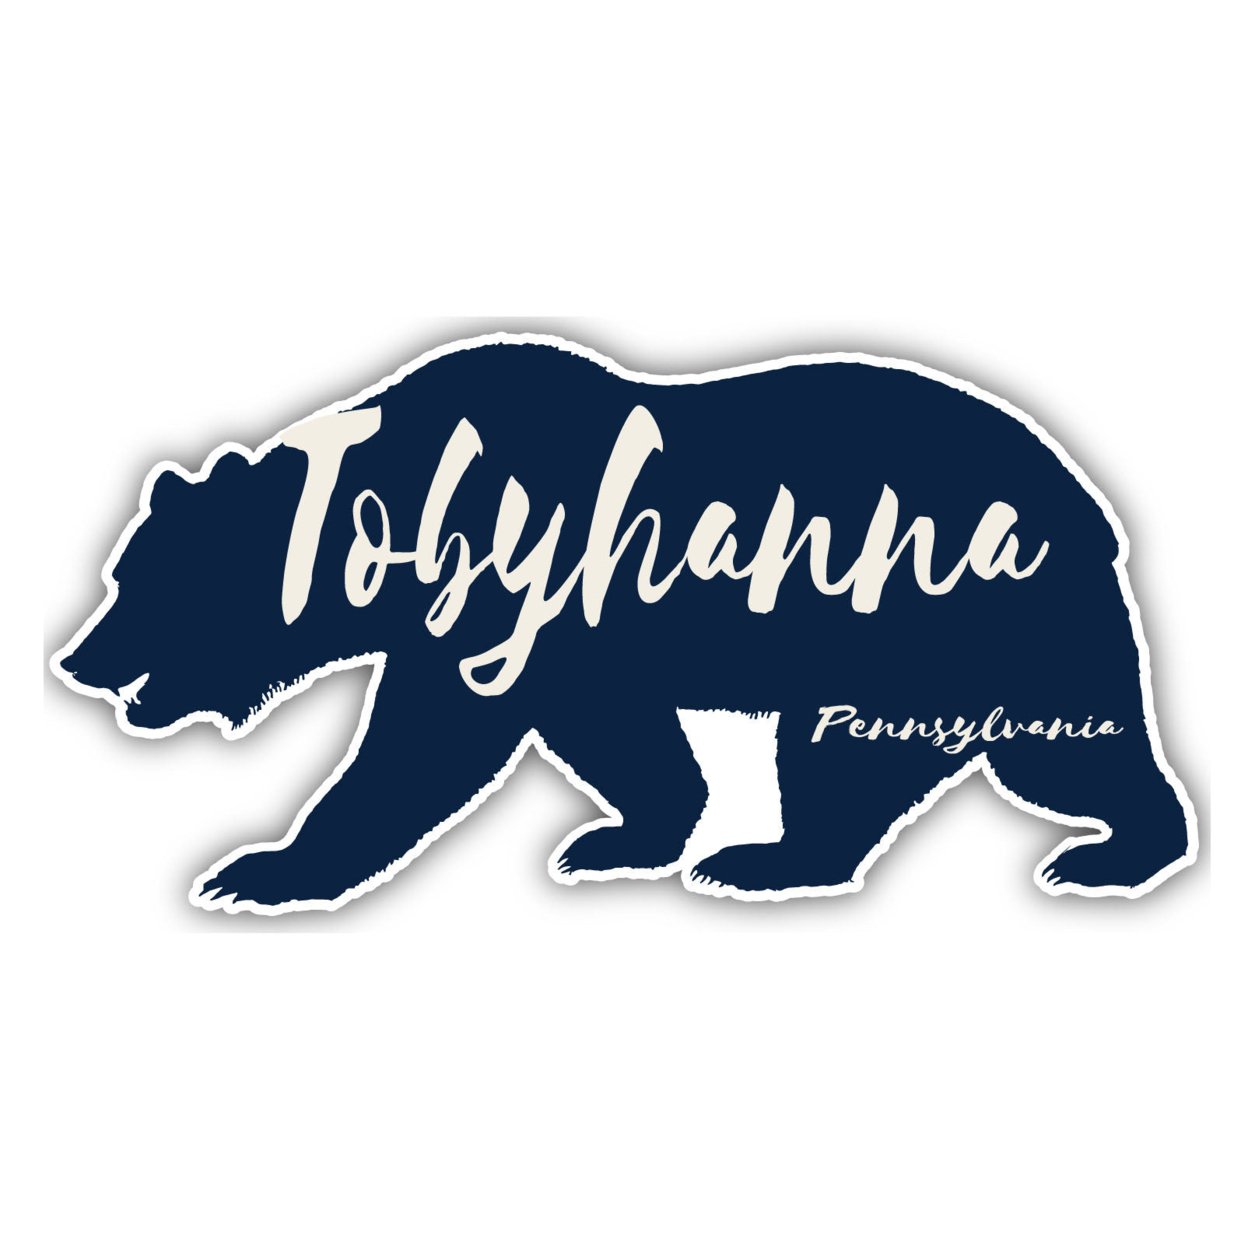 Tobyhanna Pennsylvania Souvenir Decorative Stickers (Choose Theme And Size) - Single Unit, 4-Inch, Great Outdoors